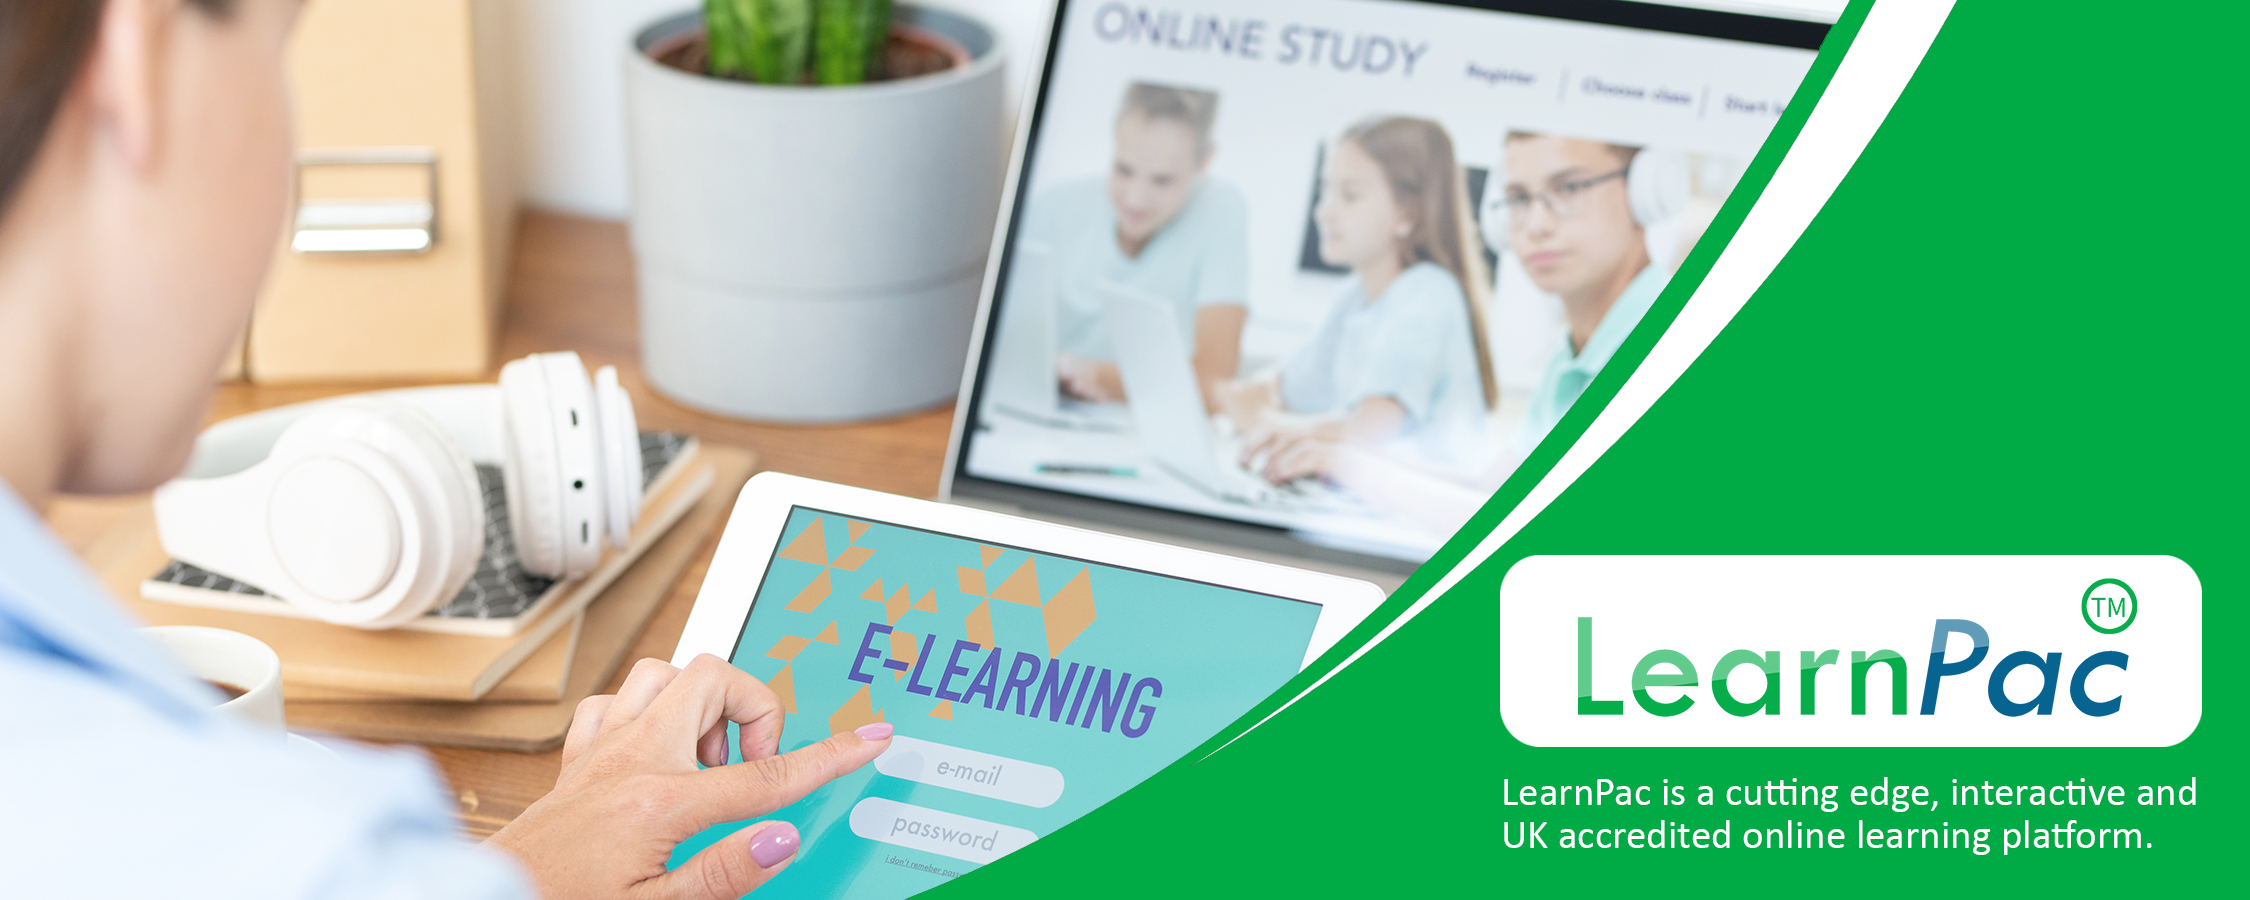 Team Building Through Chemistry - Online Learning Courses - E-Learning Courses - LearnPac Systems UK -